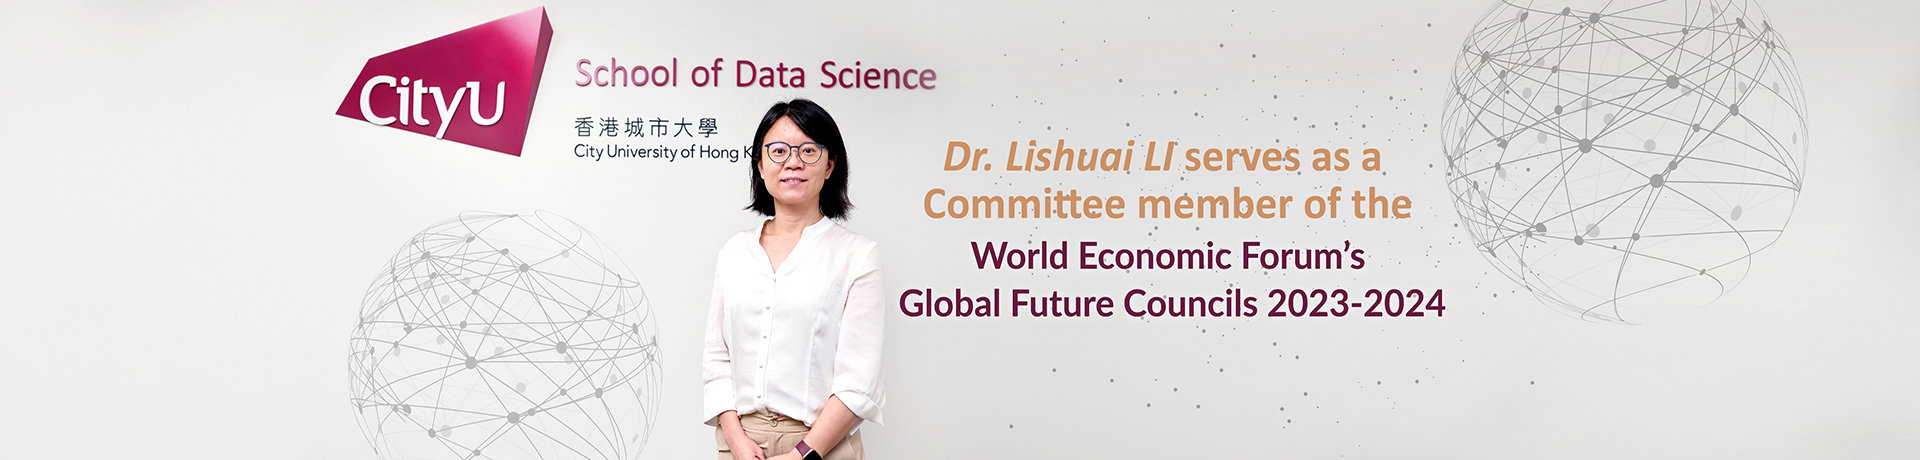 Network of Global Future Councils 2023-2024 - Invitation for Dr Li Lishuai